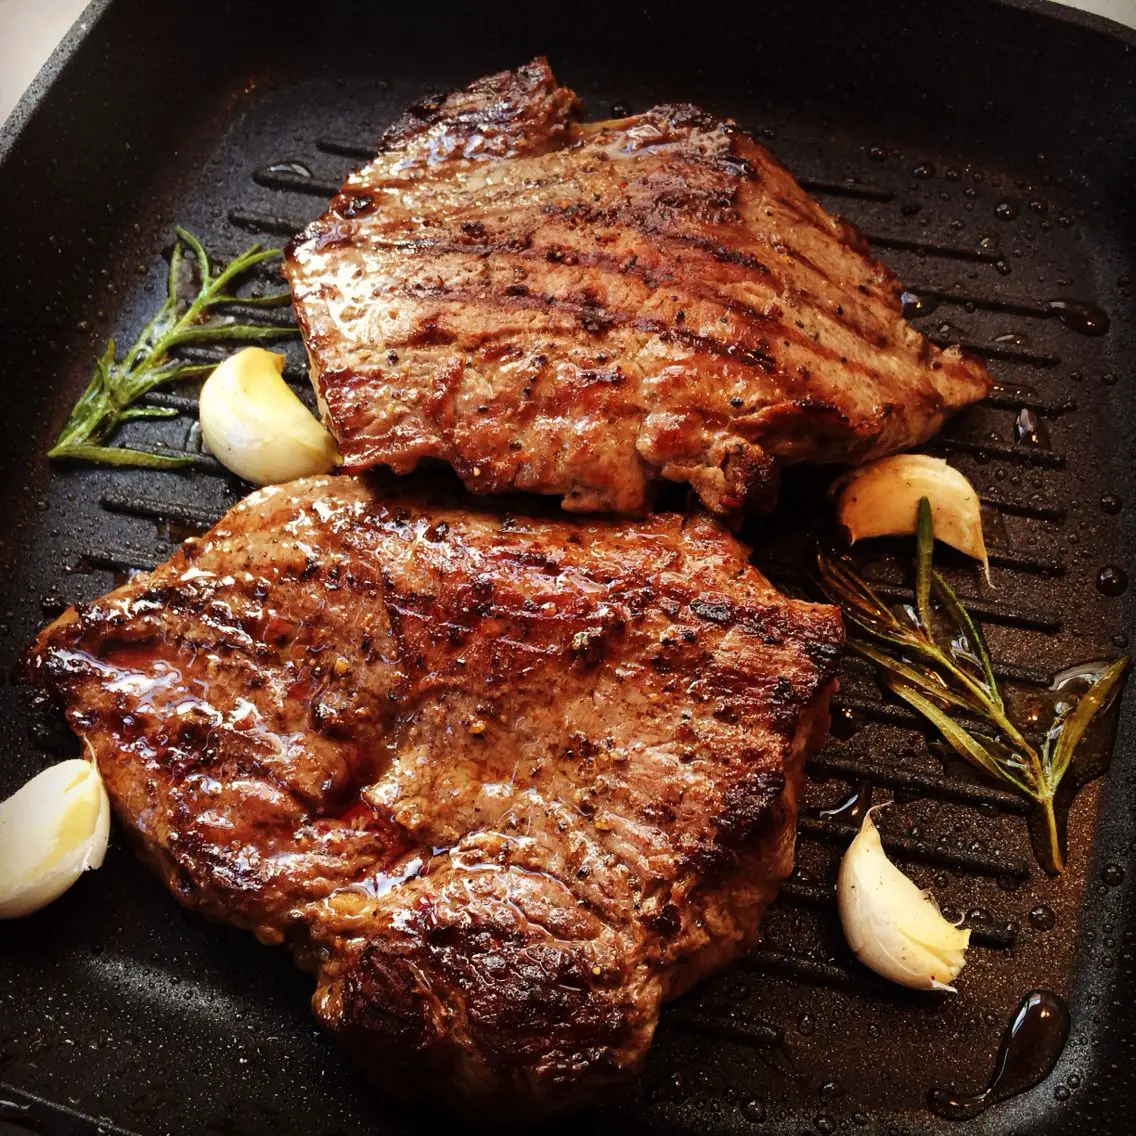 The perfect steak